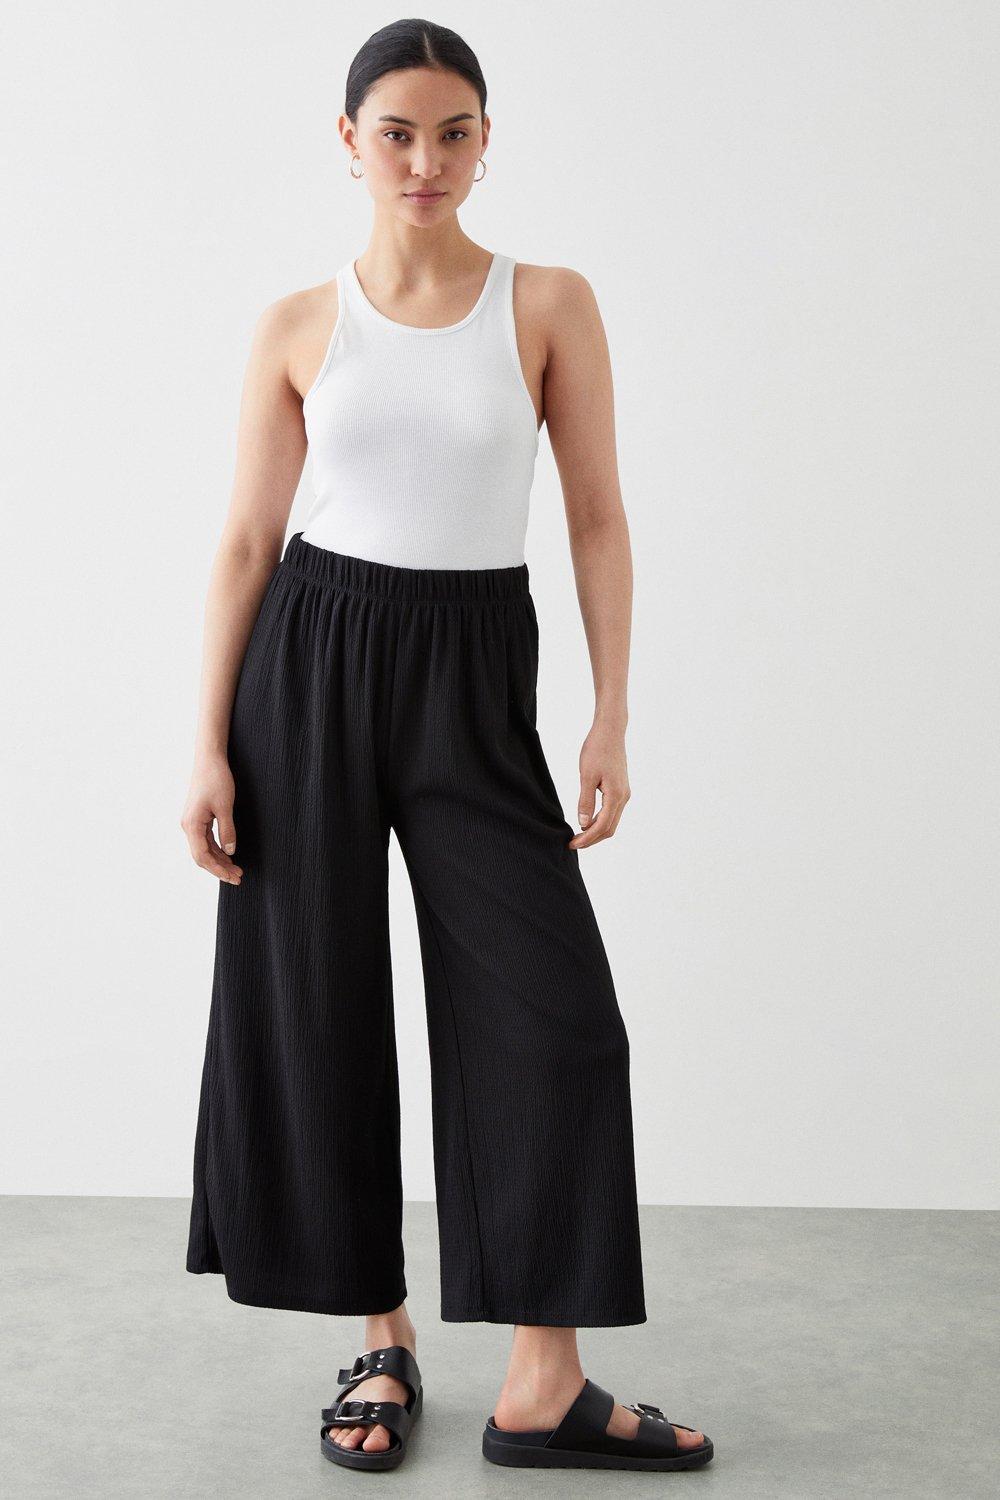 Women’s Petite Textured Crop Trouser - black - S